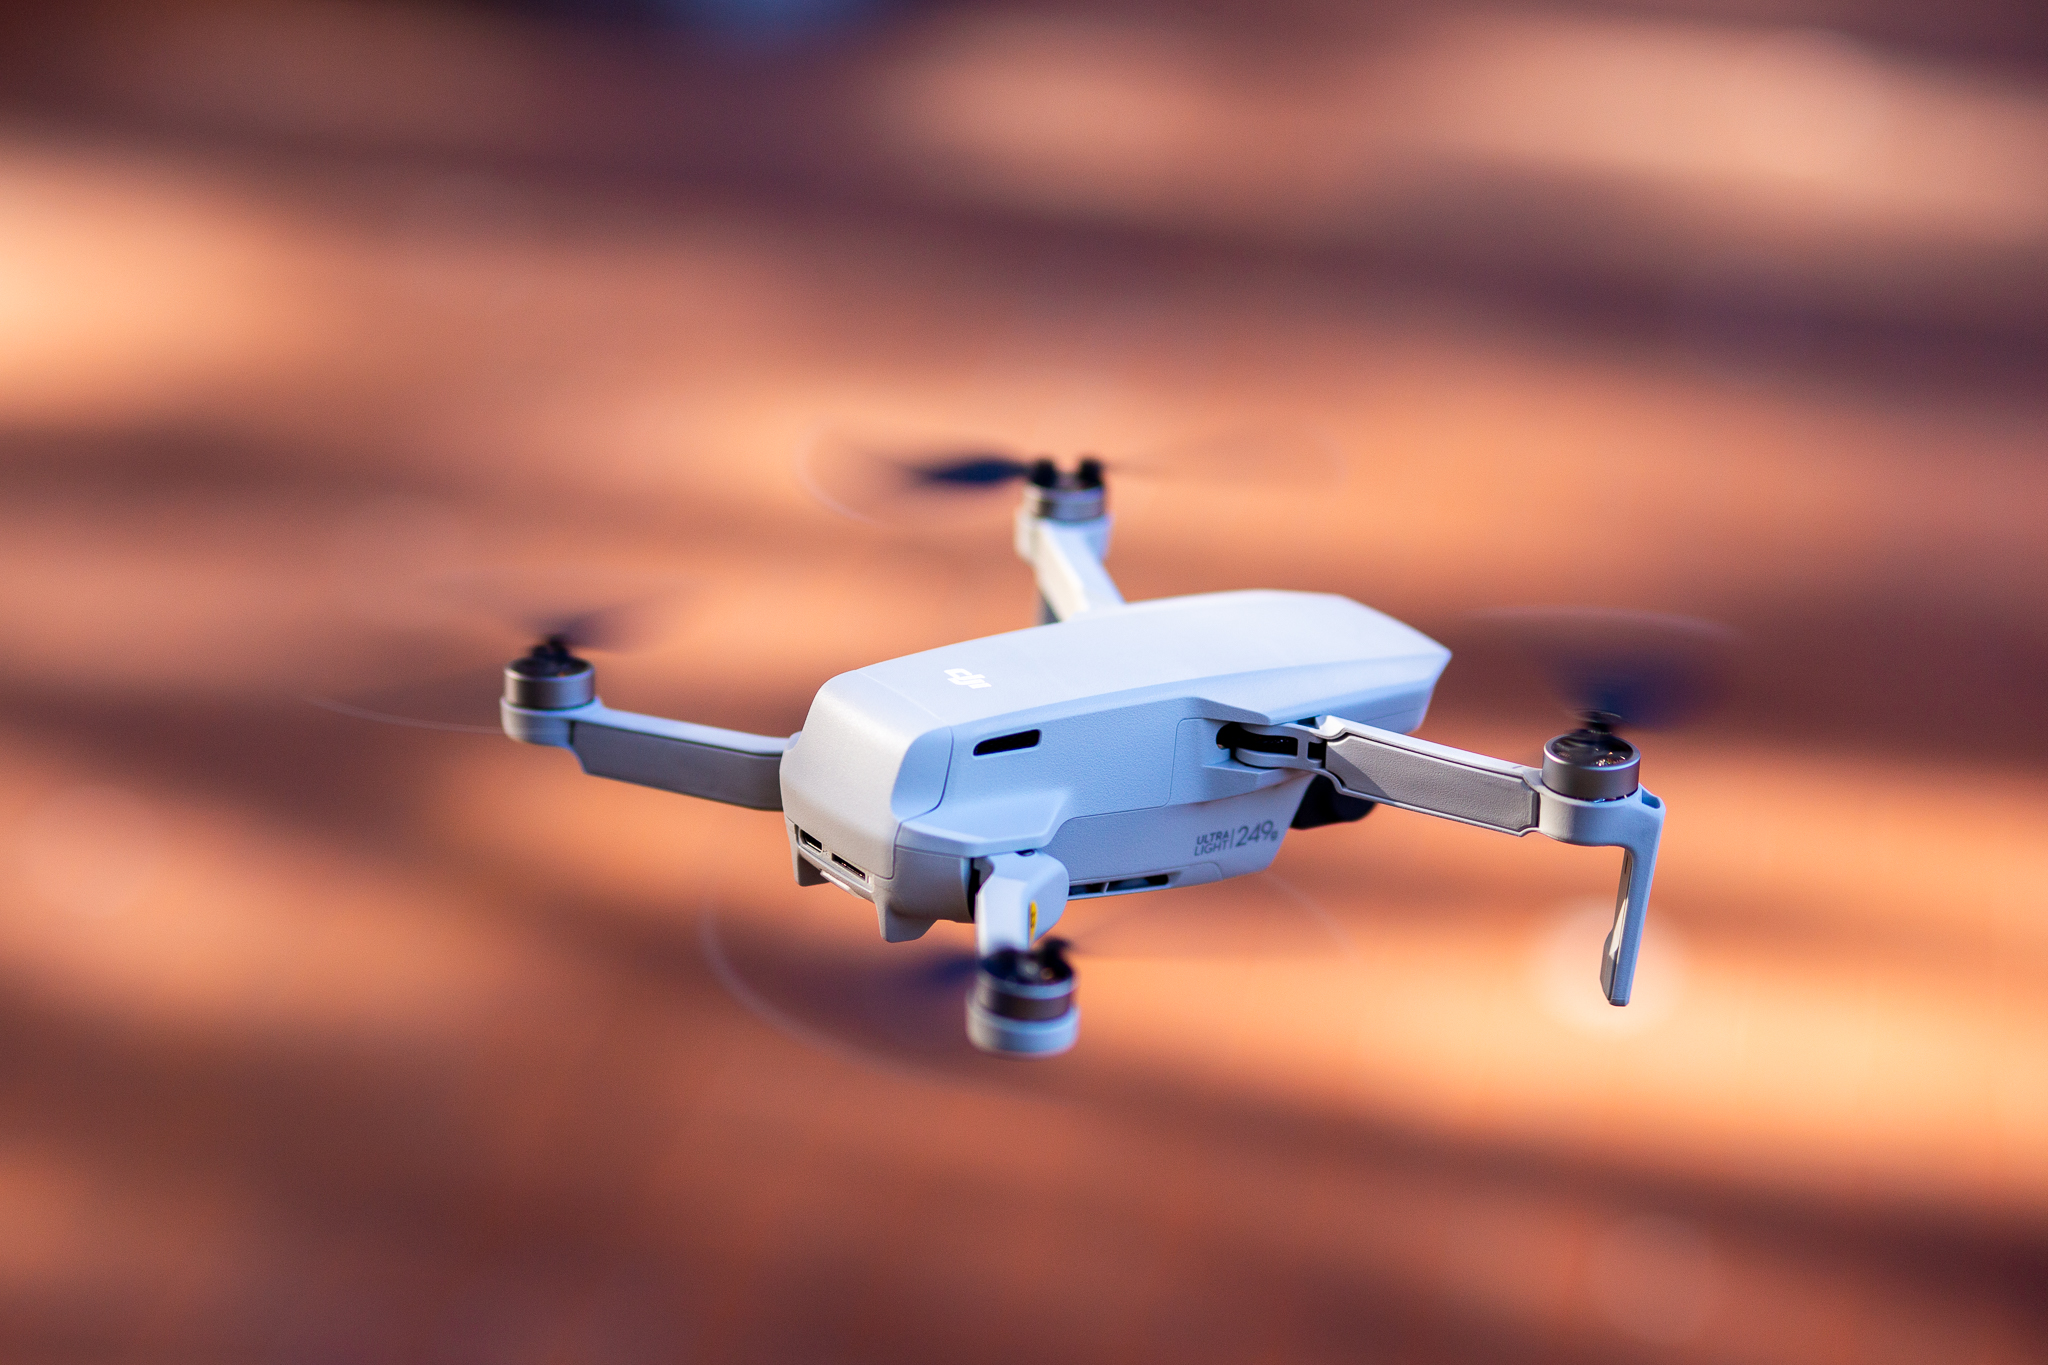 Mavic Mini A Weekend Living Simple With DJI's Drone | Digital Trends